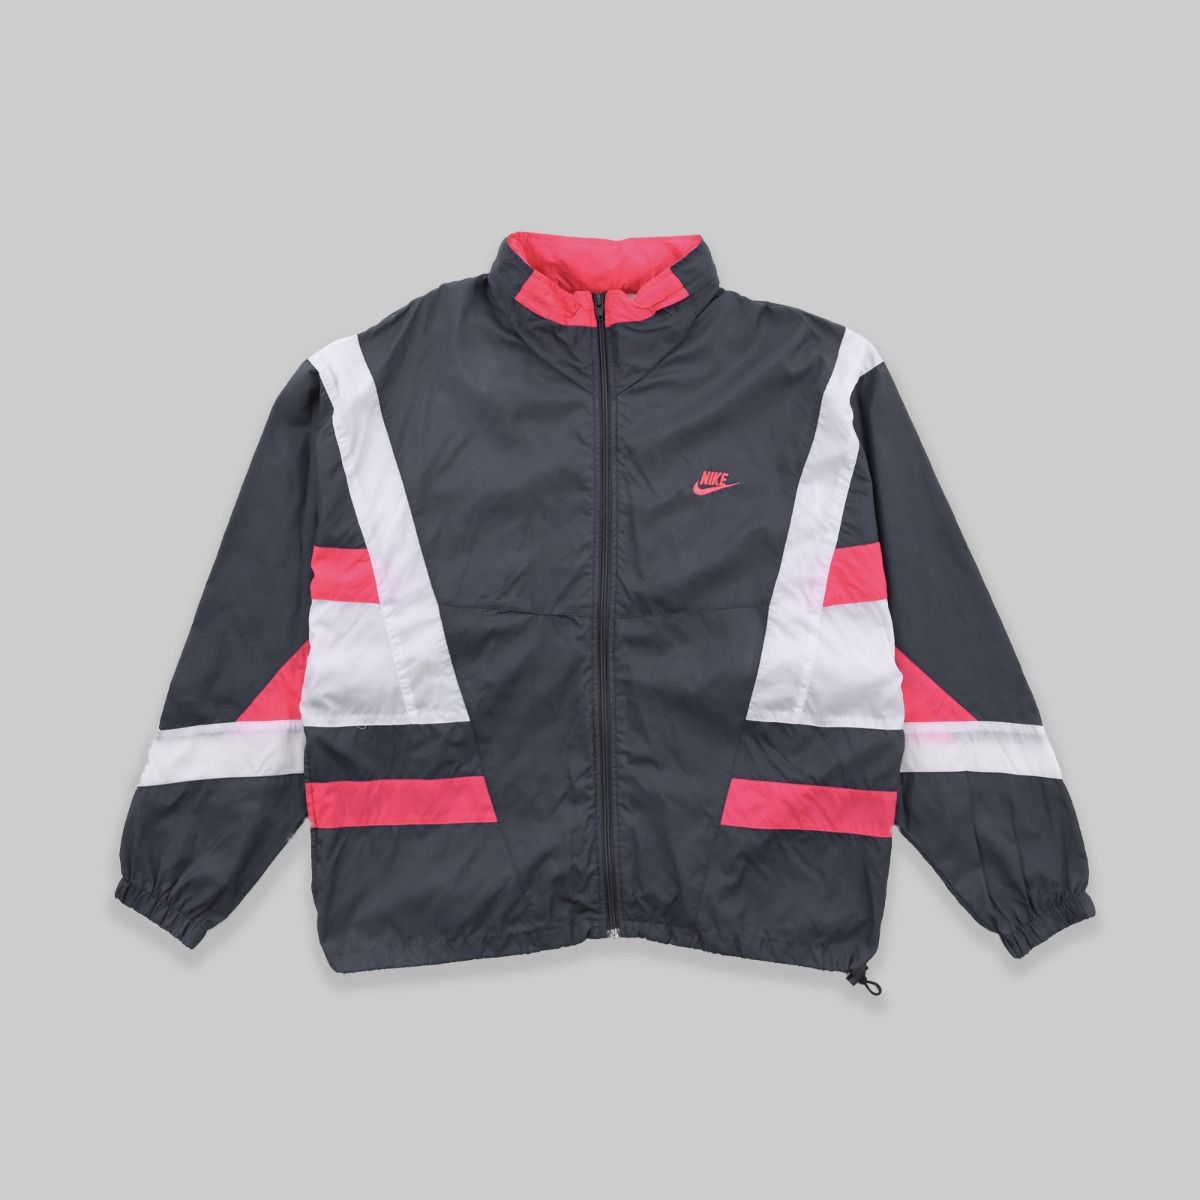 Nike Early 1990s Shell Jacket